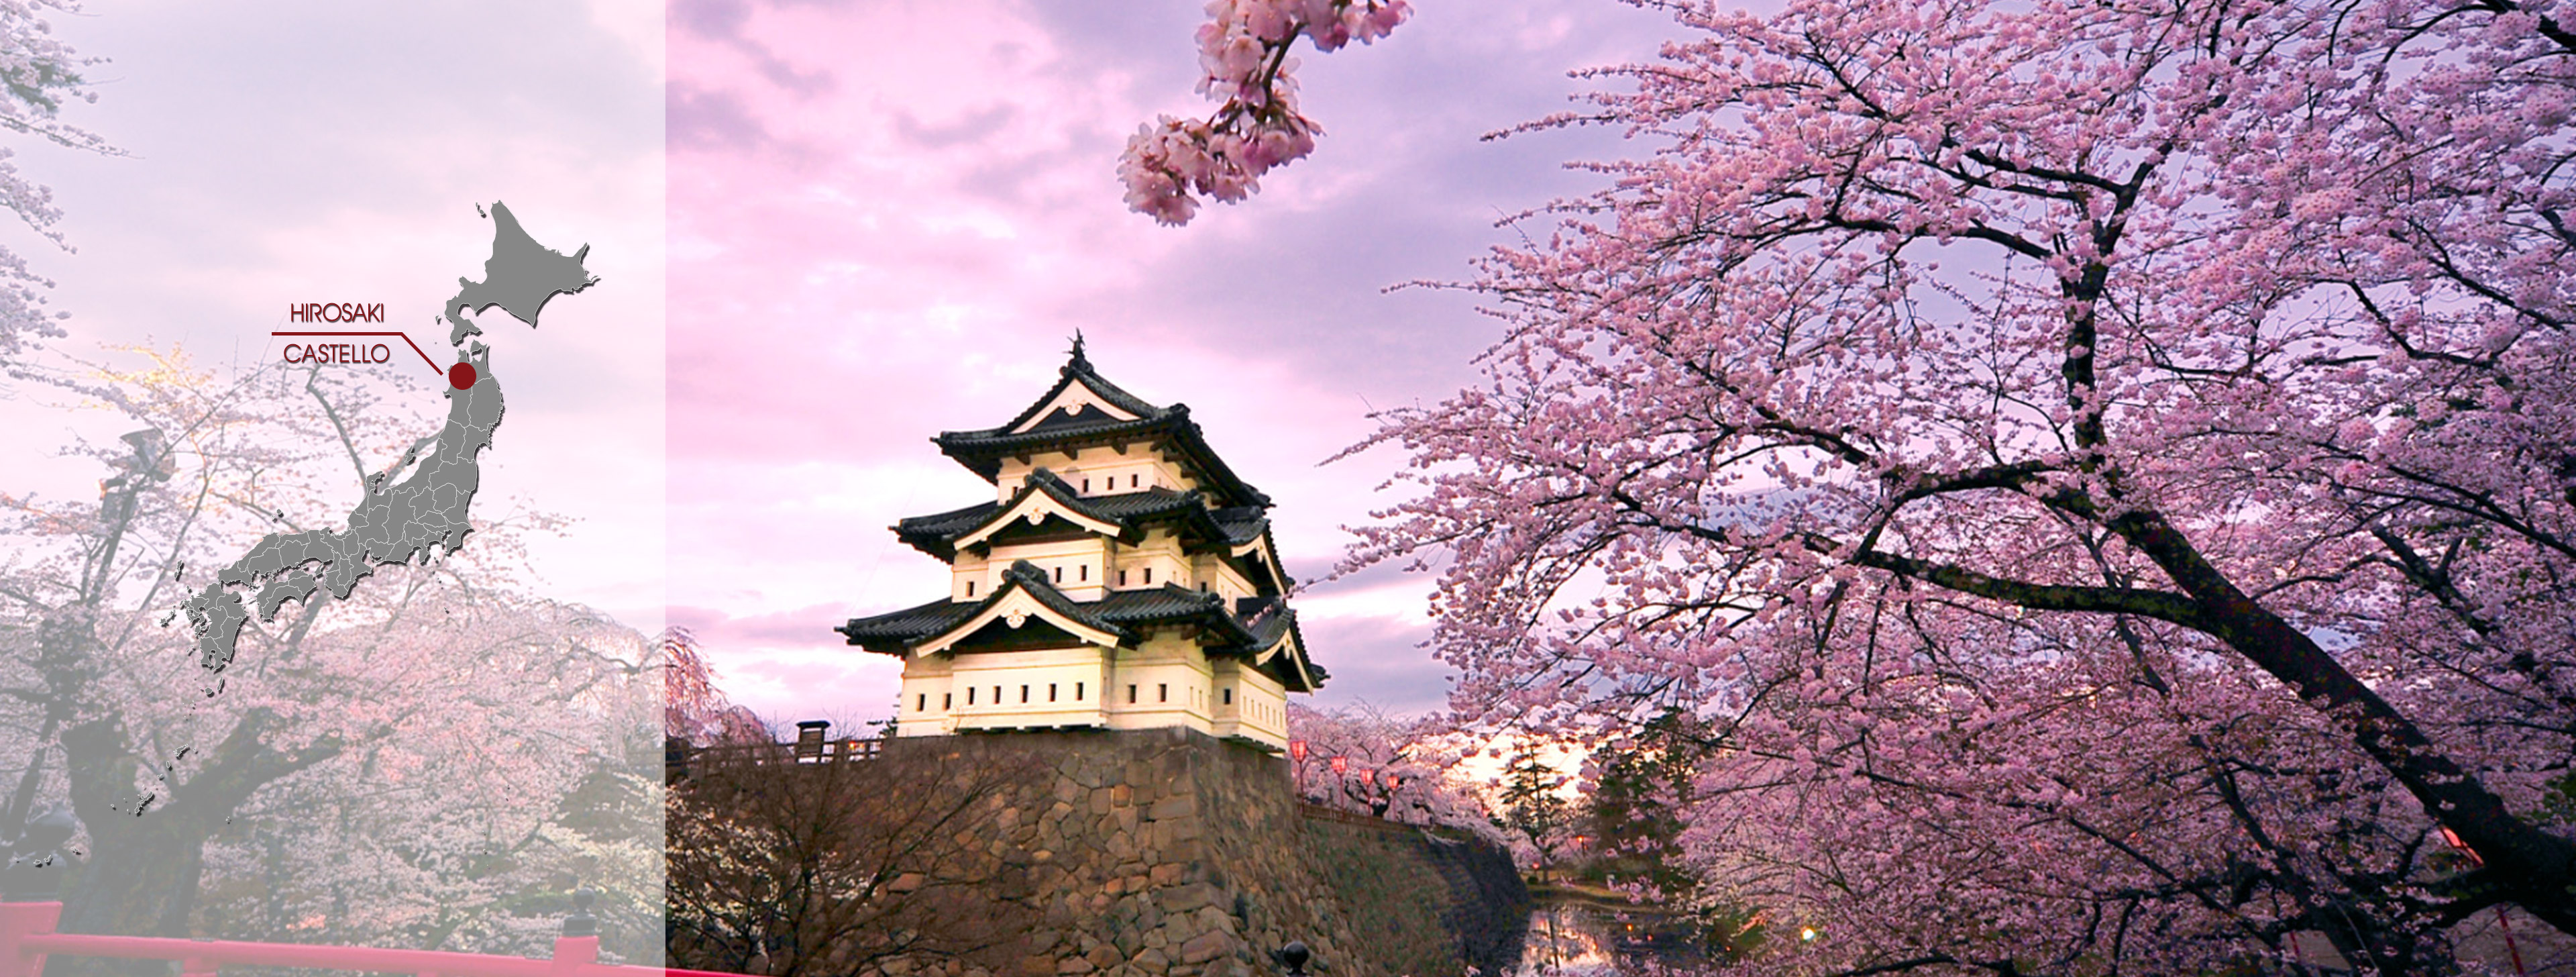 Hirosaki-Castle